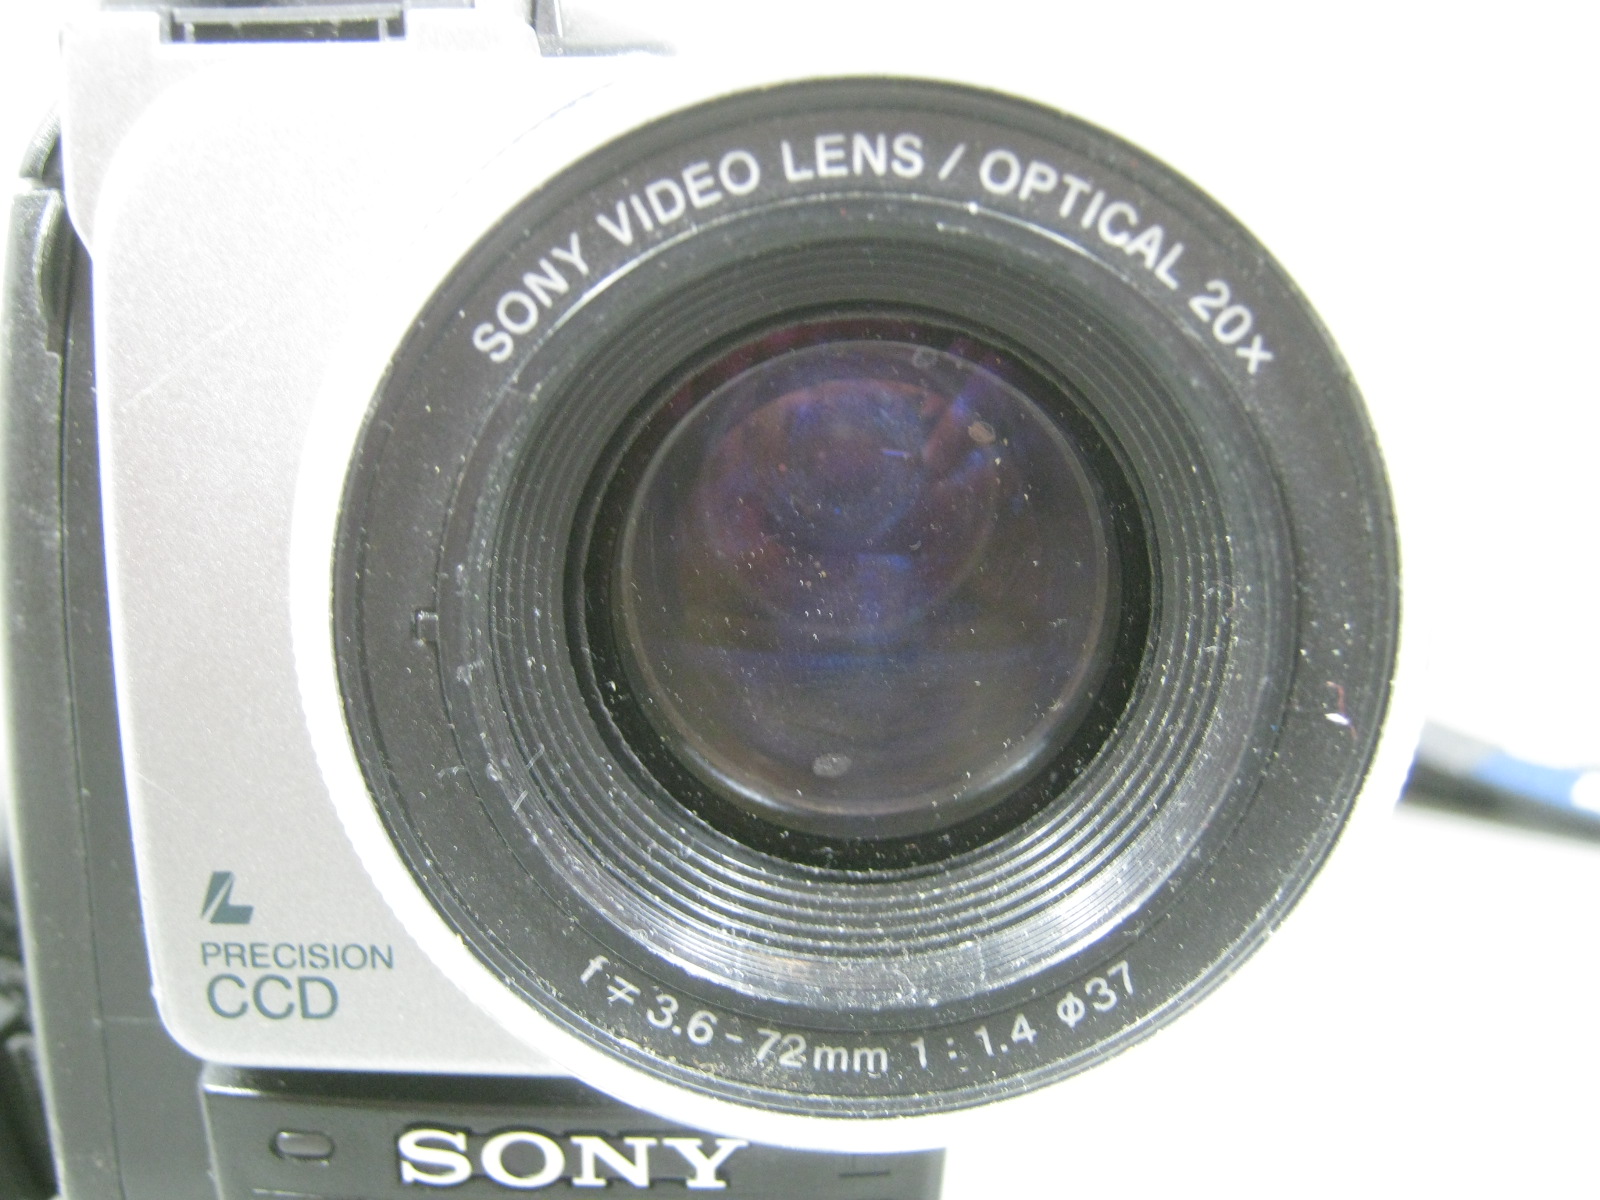 Sony Digital 8 Handycam DCR-TRV110 NTSC Video Camera Camcorder Nightshot Hi8 NR 6